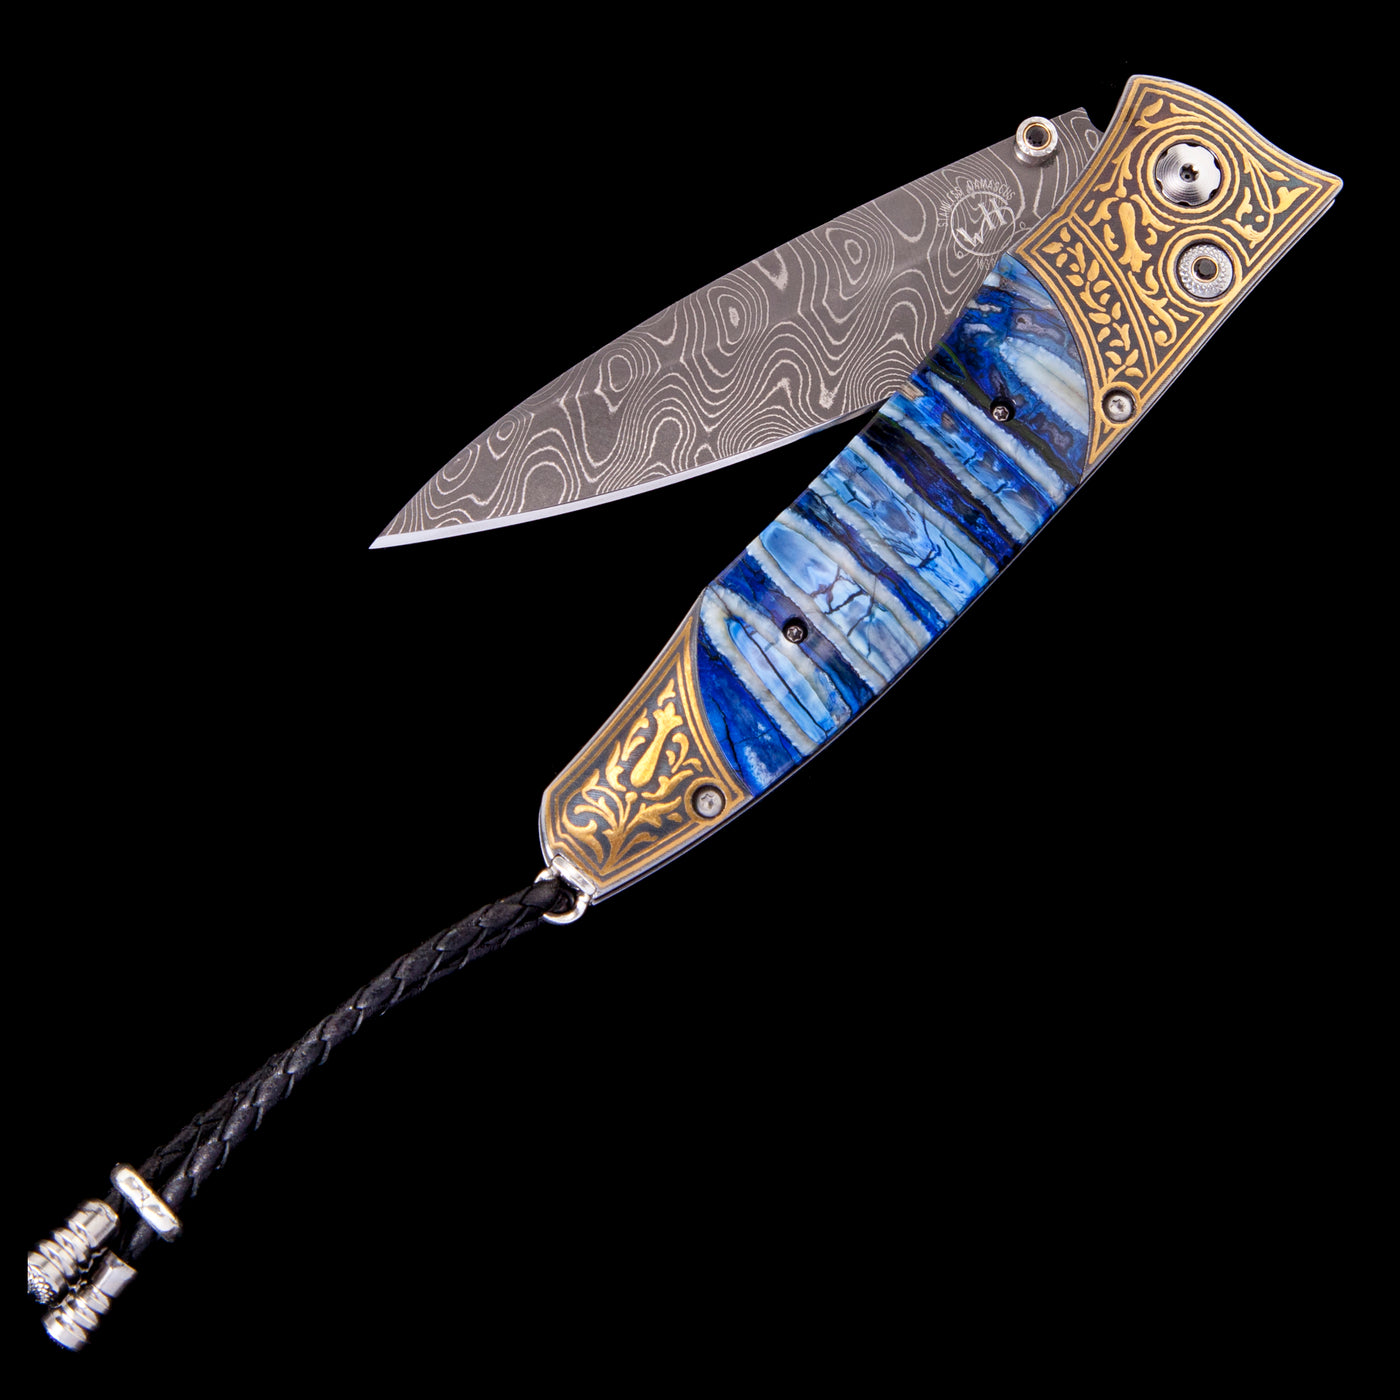 Gentac Antiquity Knife by William Henry Studio